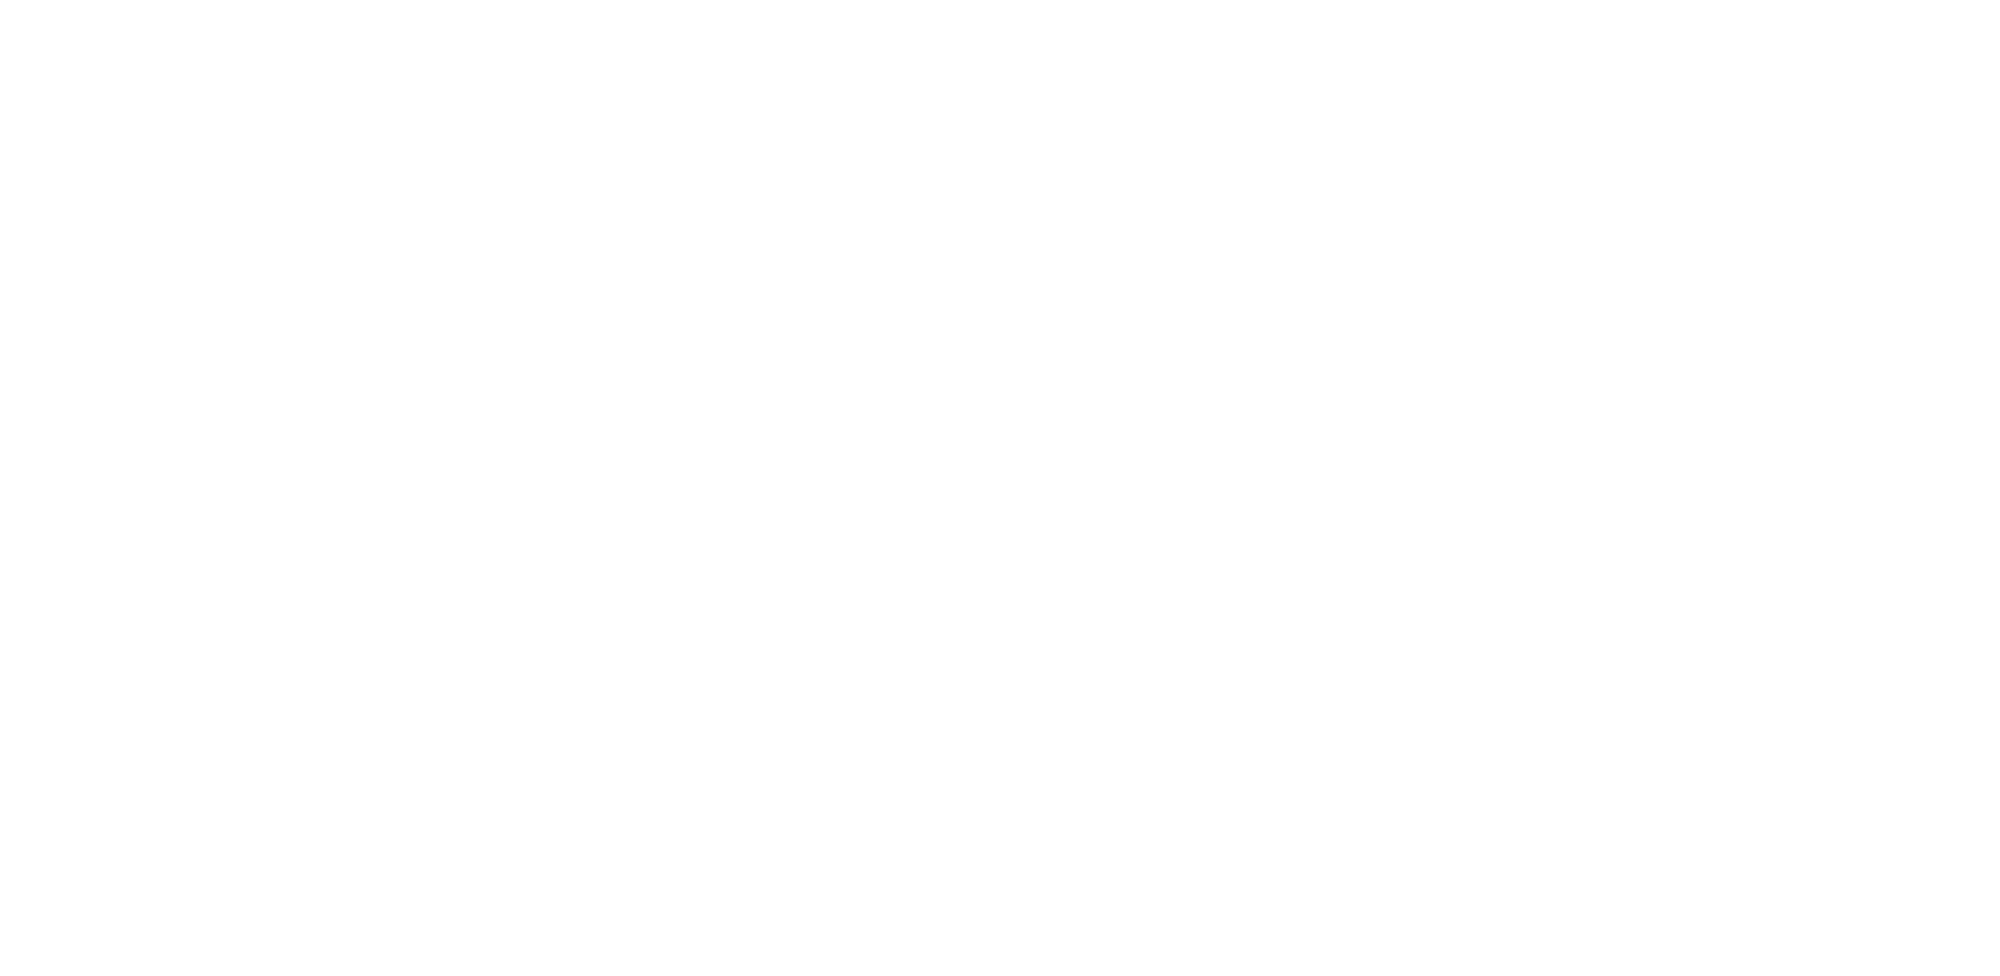 Giggs & Company